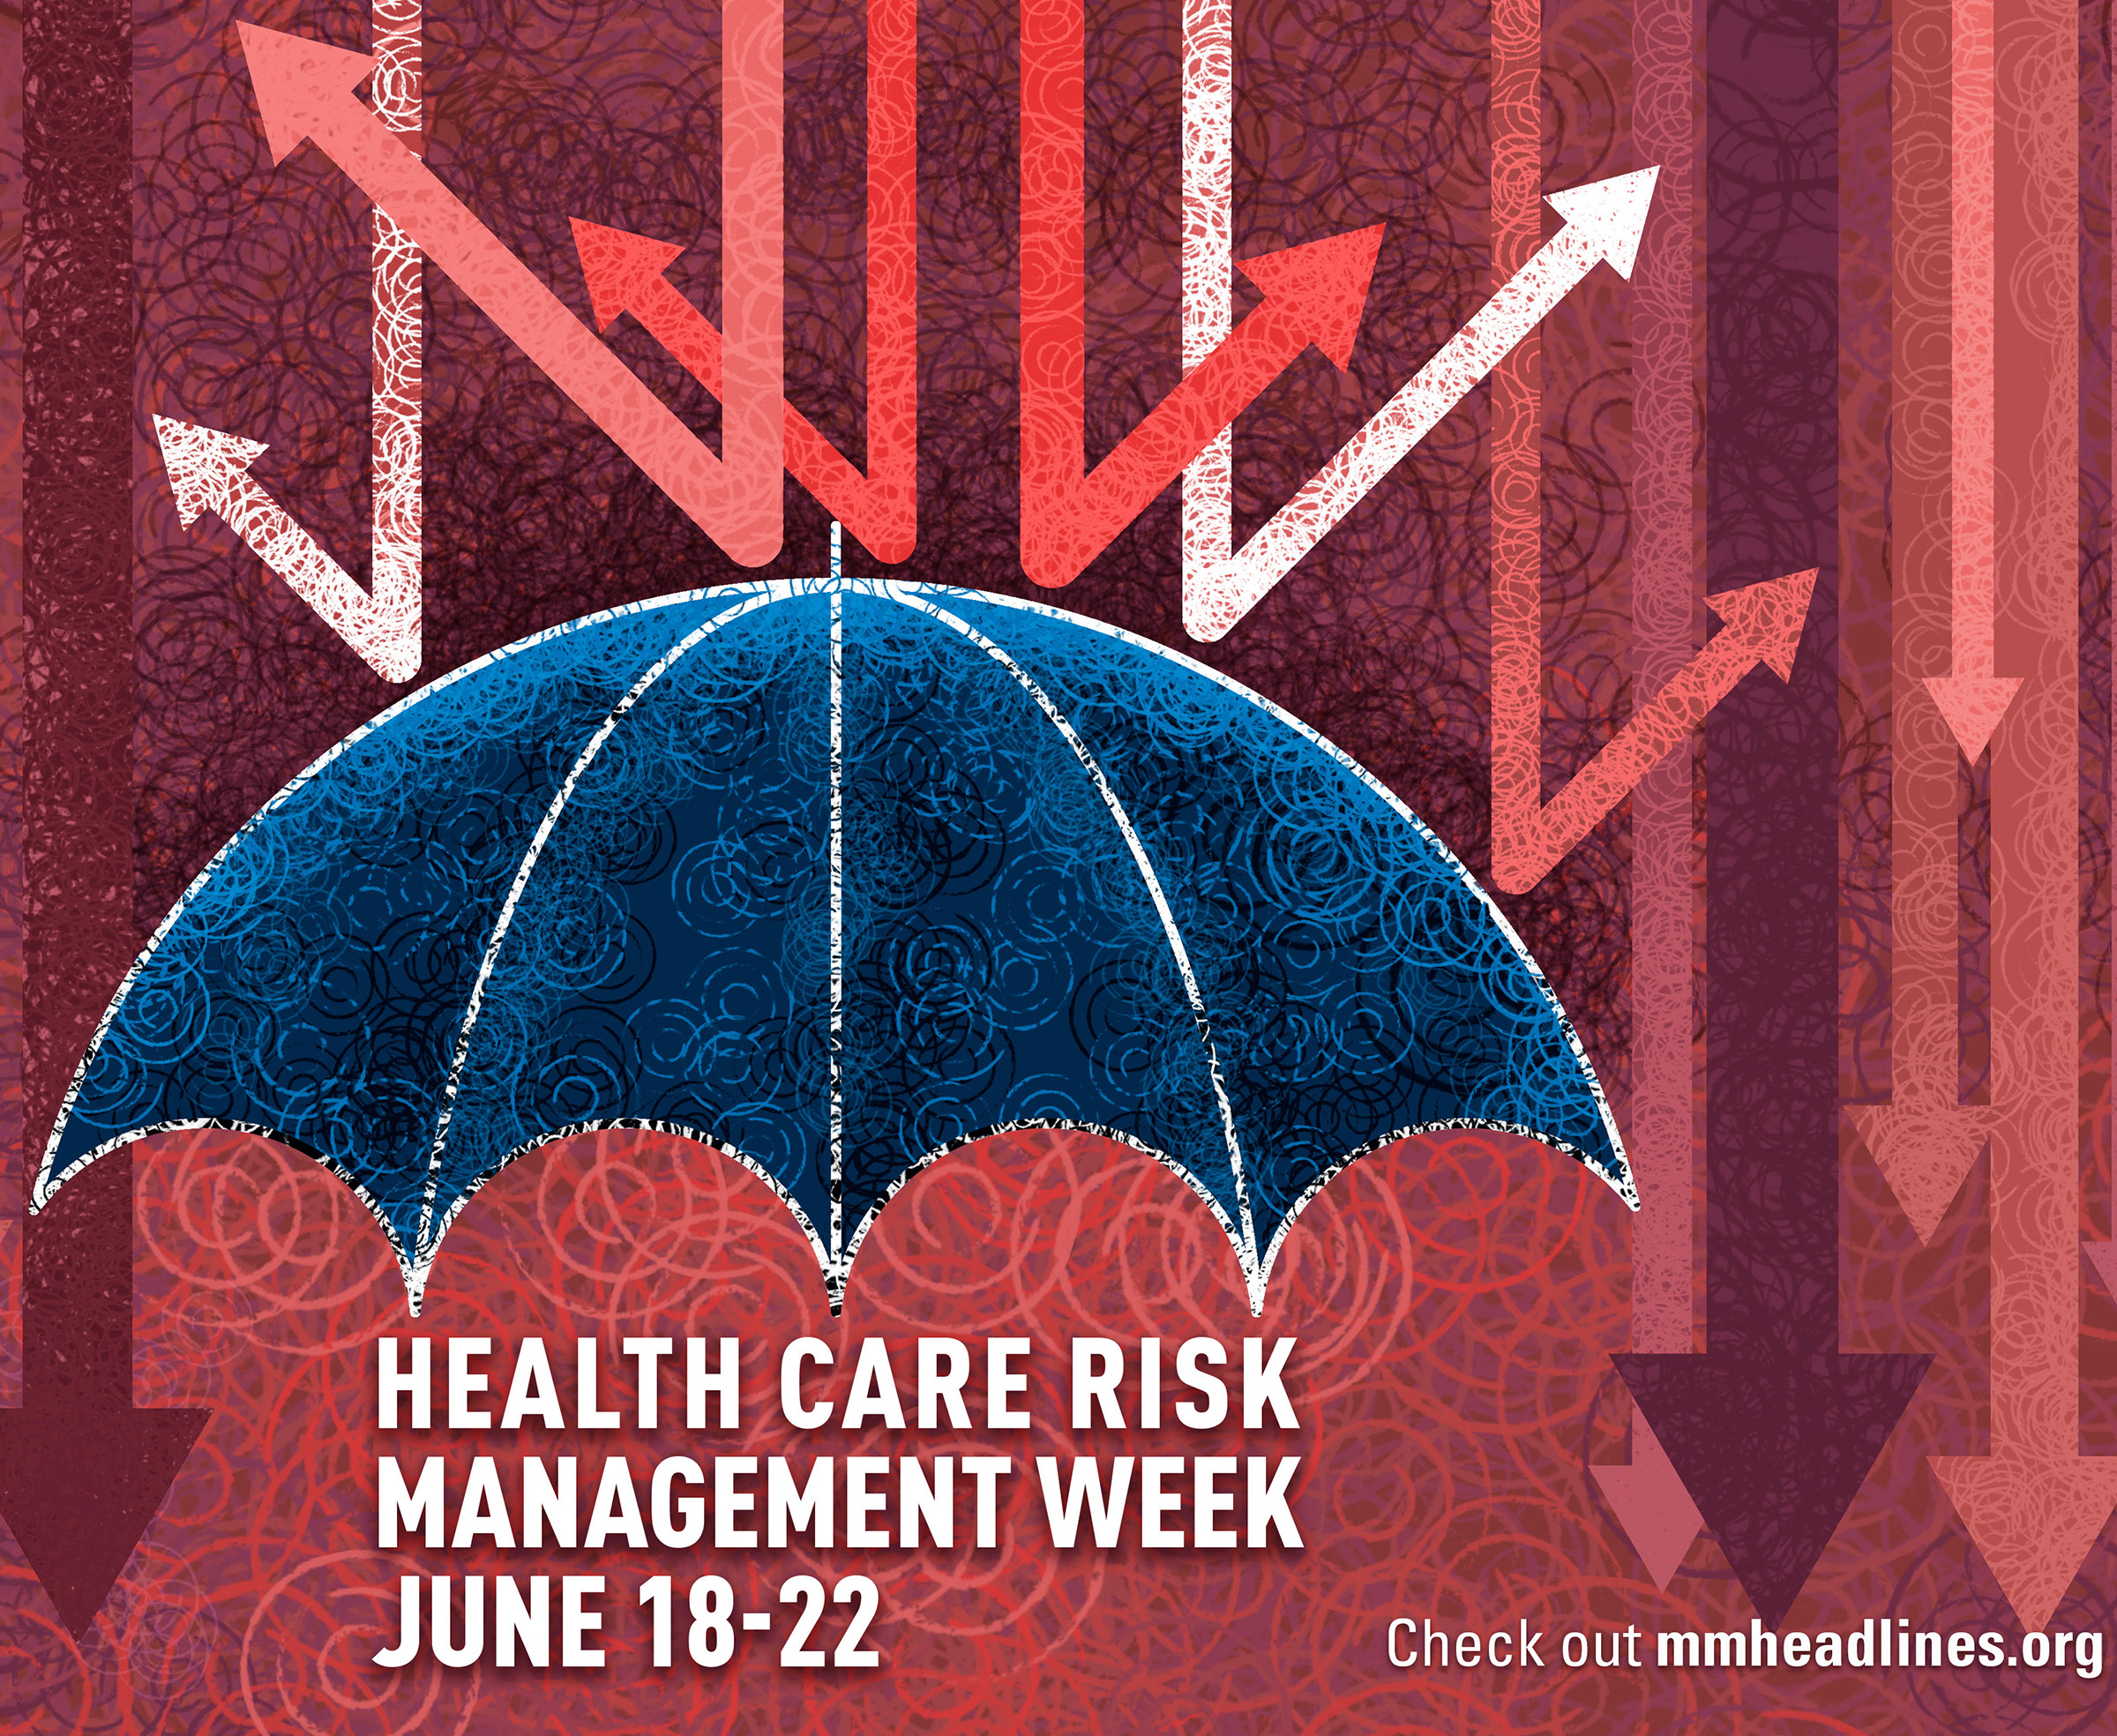 Michigan Medicine Digital Signage-umbrella